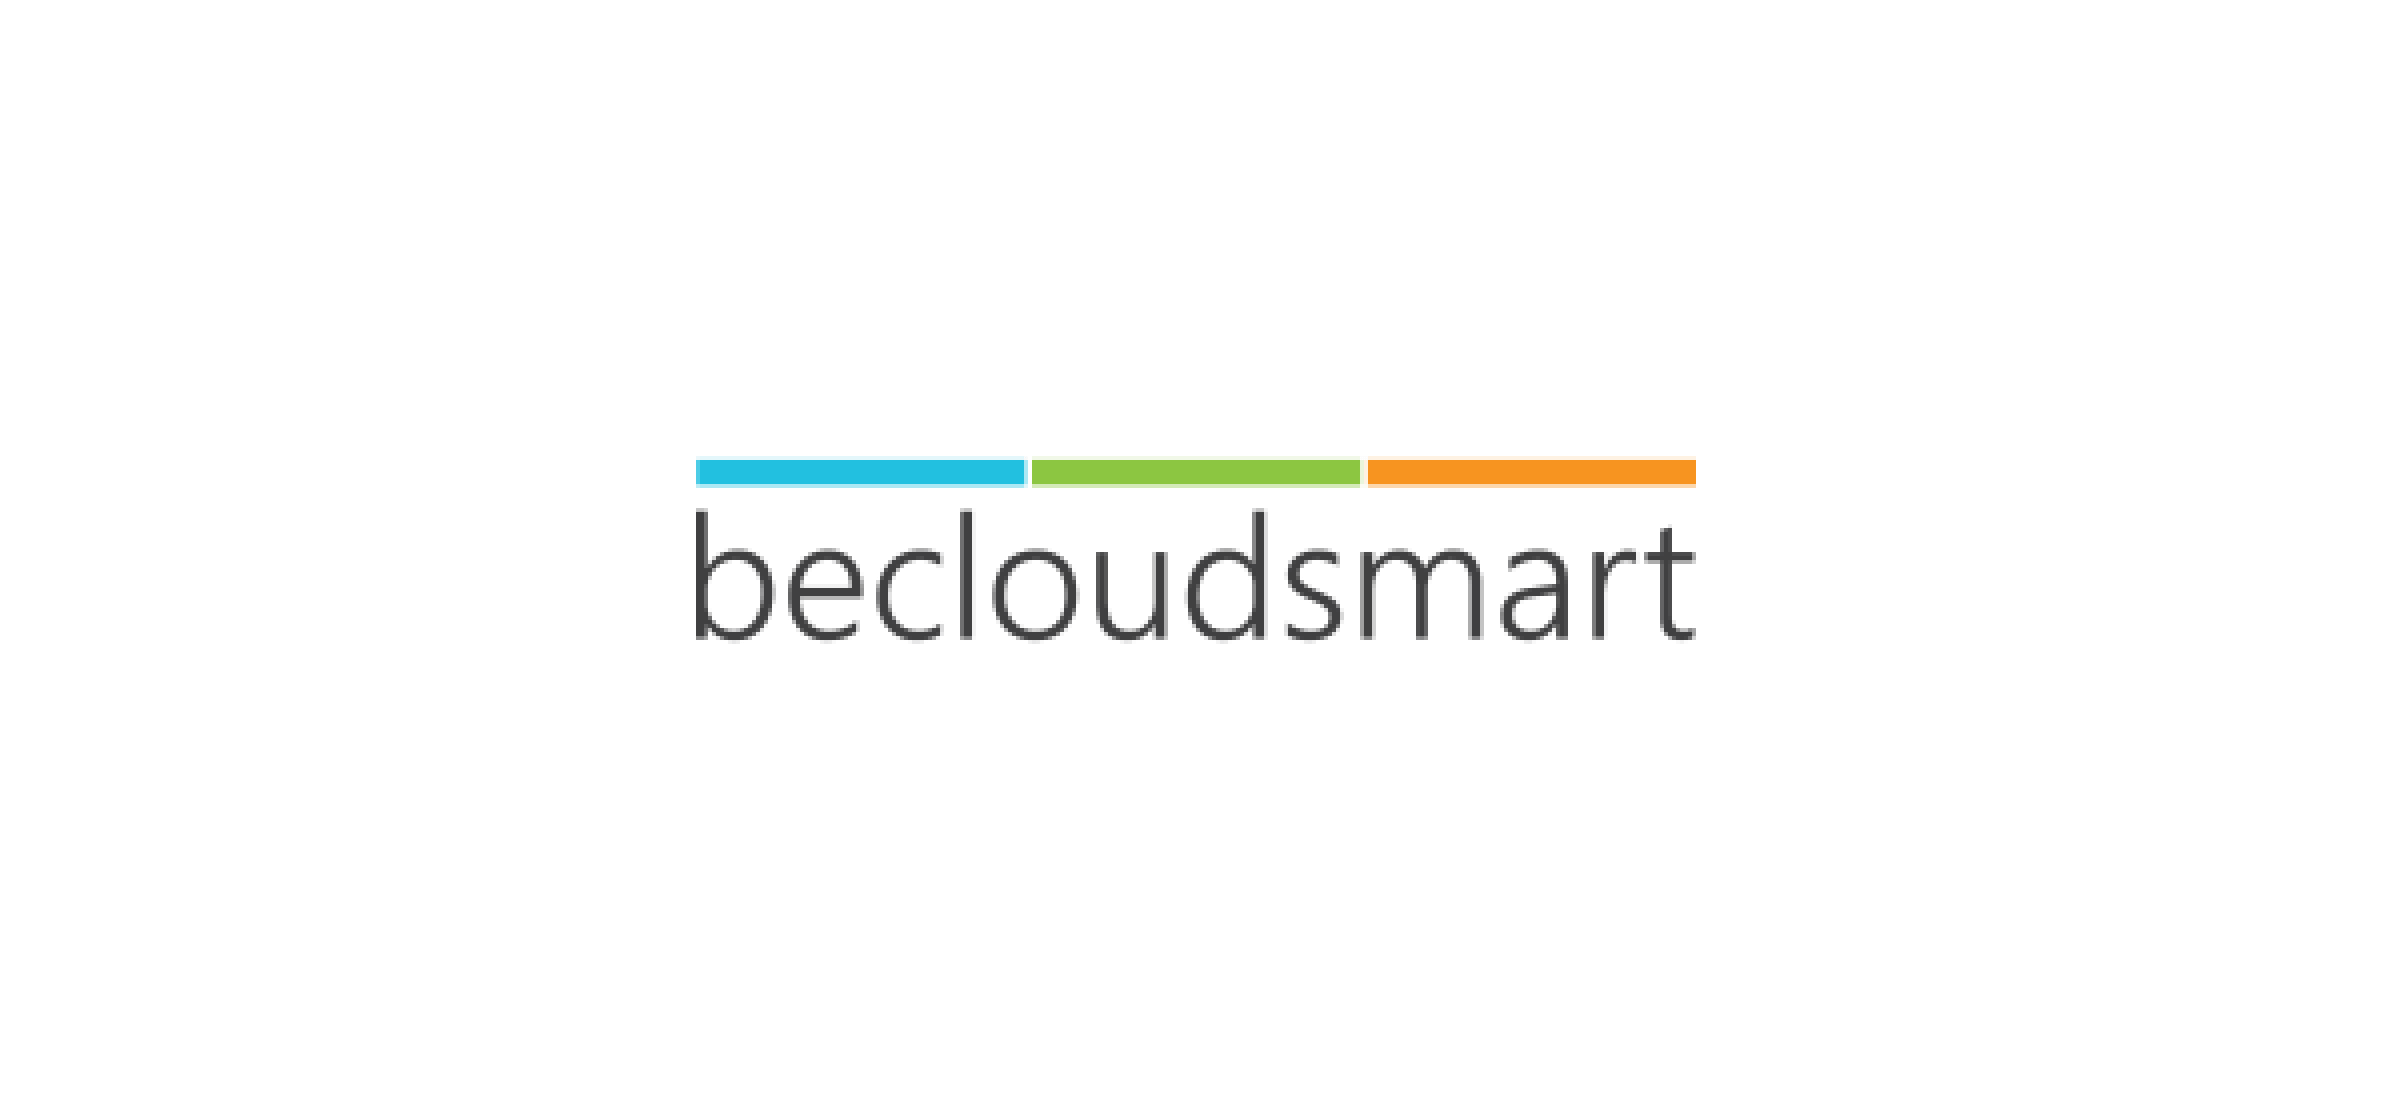 The Be Cloud Smart logo